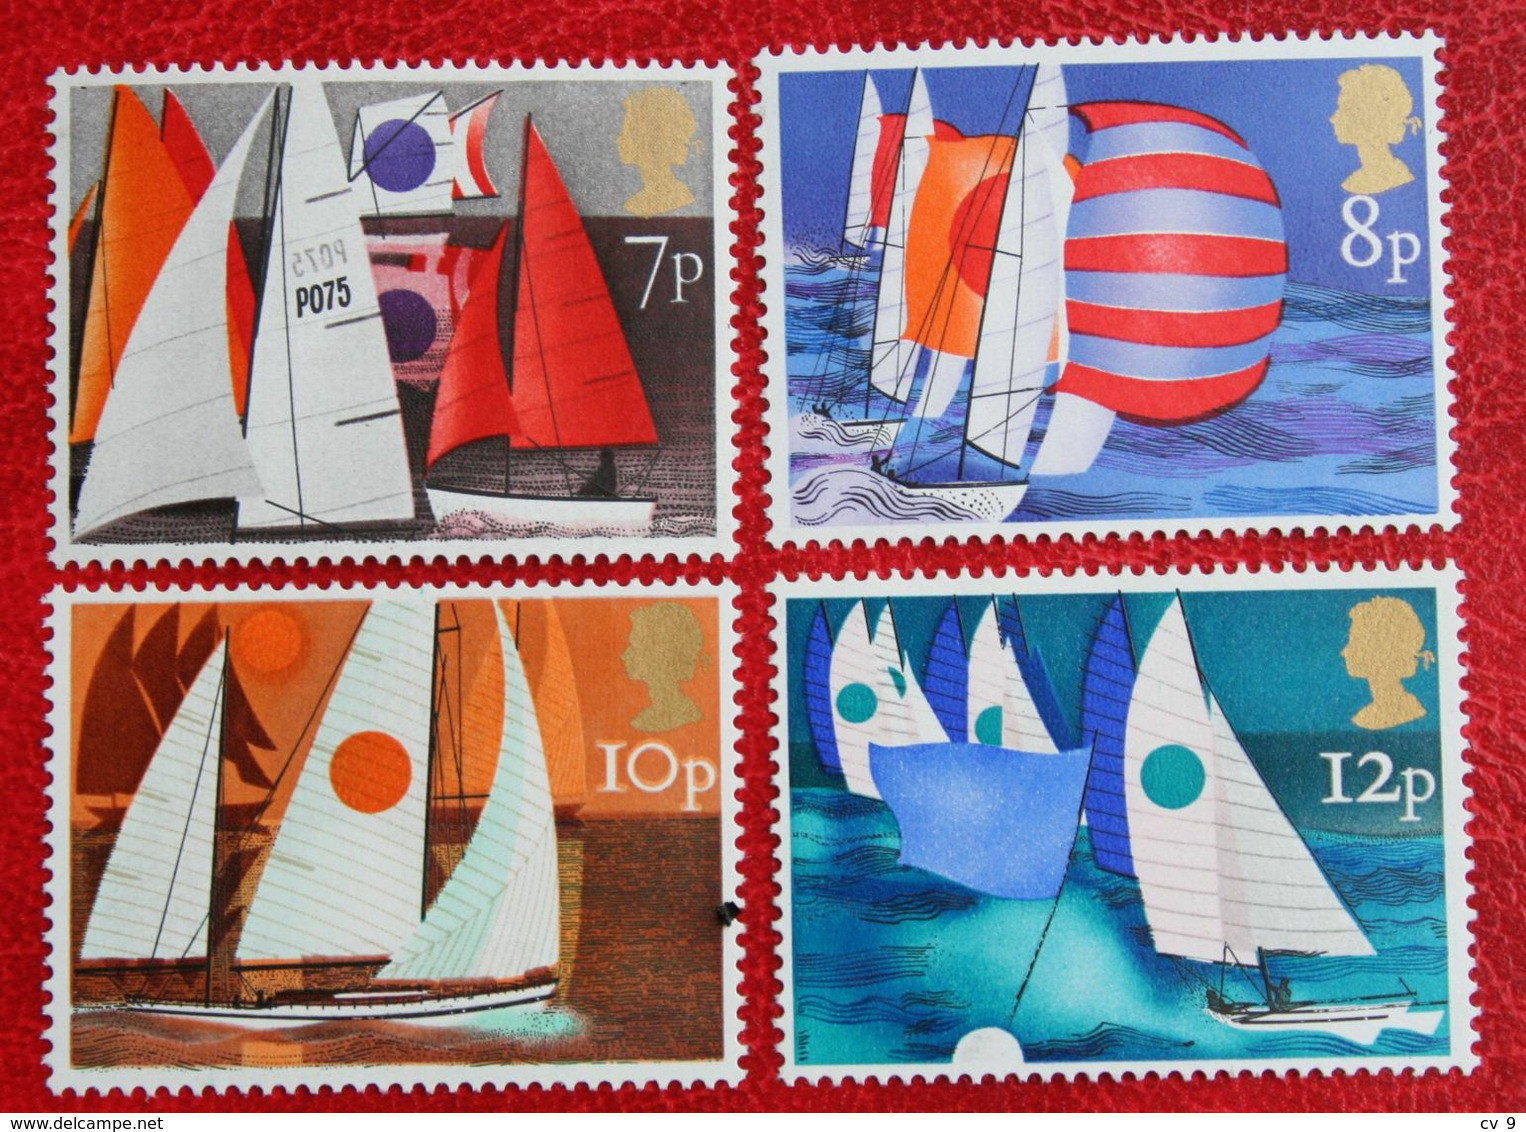 Royal Yacht Club Sailing Boat (Mi 678-681) 1975 POSTFRIS MNH ** ENGLAND GRANDE-BRETAGNE GB GREAT BRITAIN - Unused Stamps